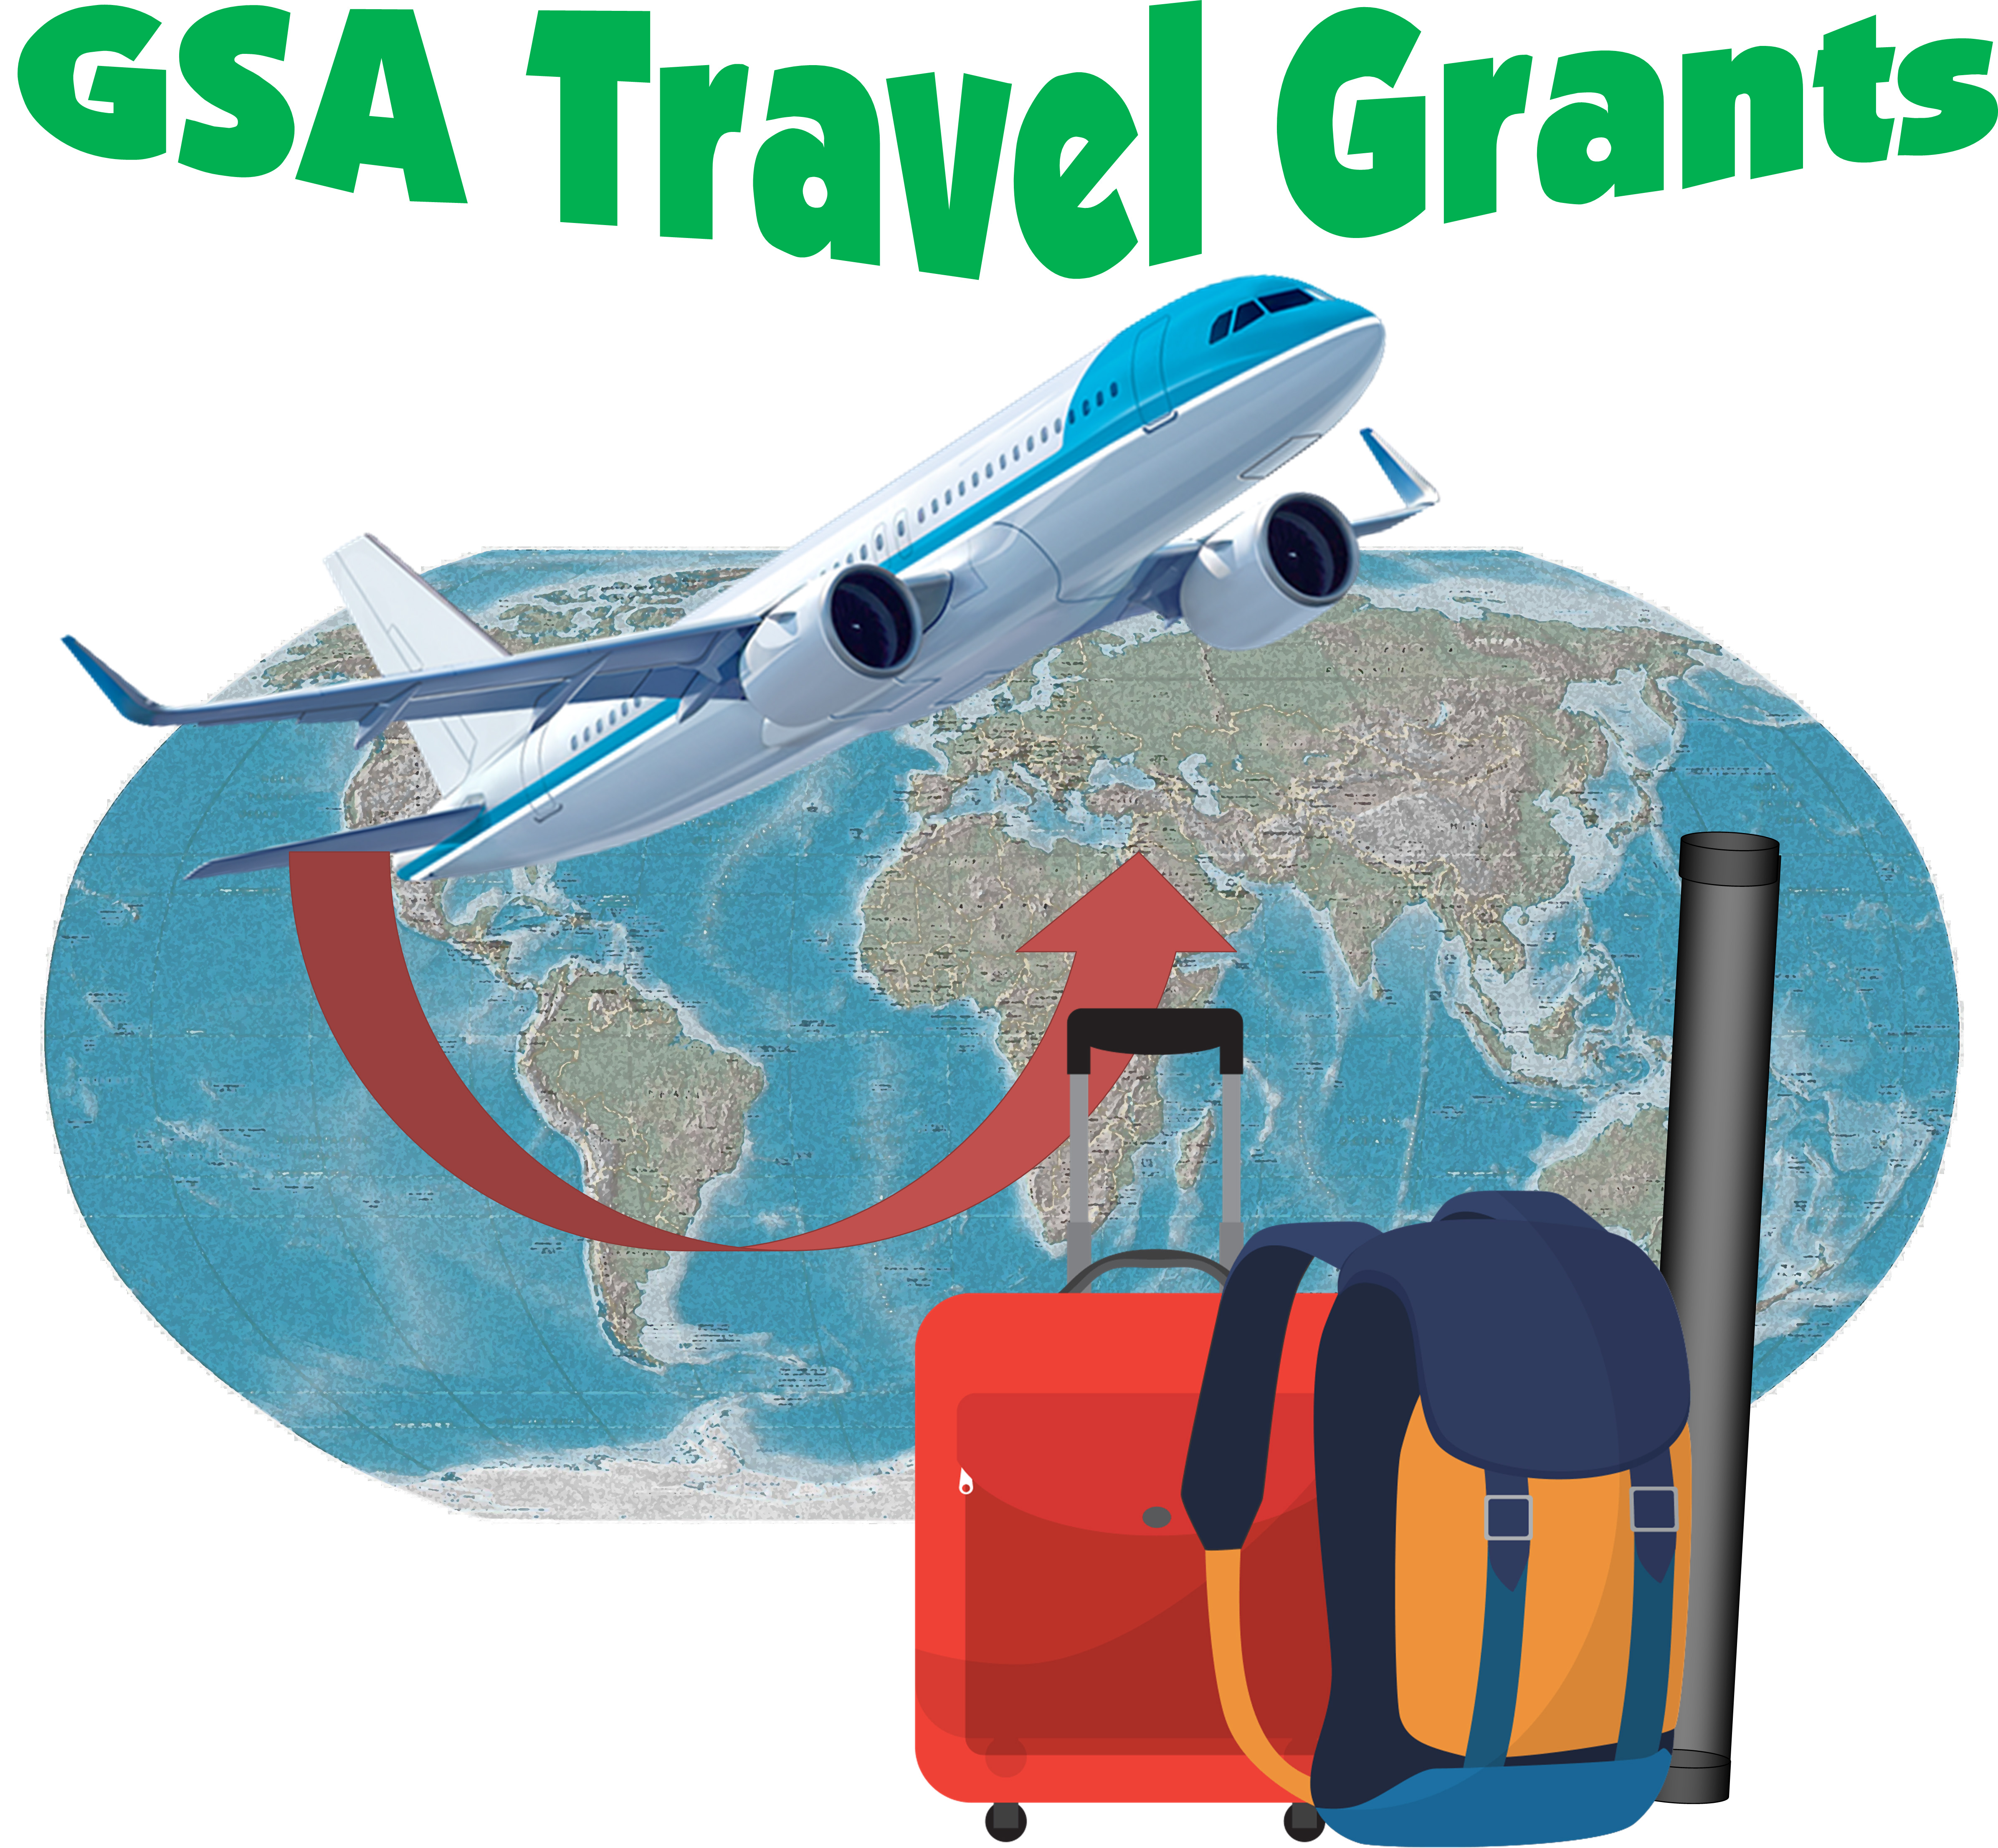 Travel grants